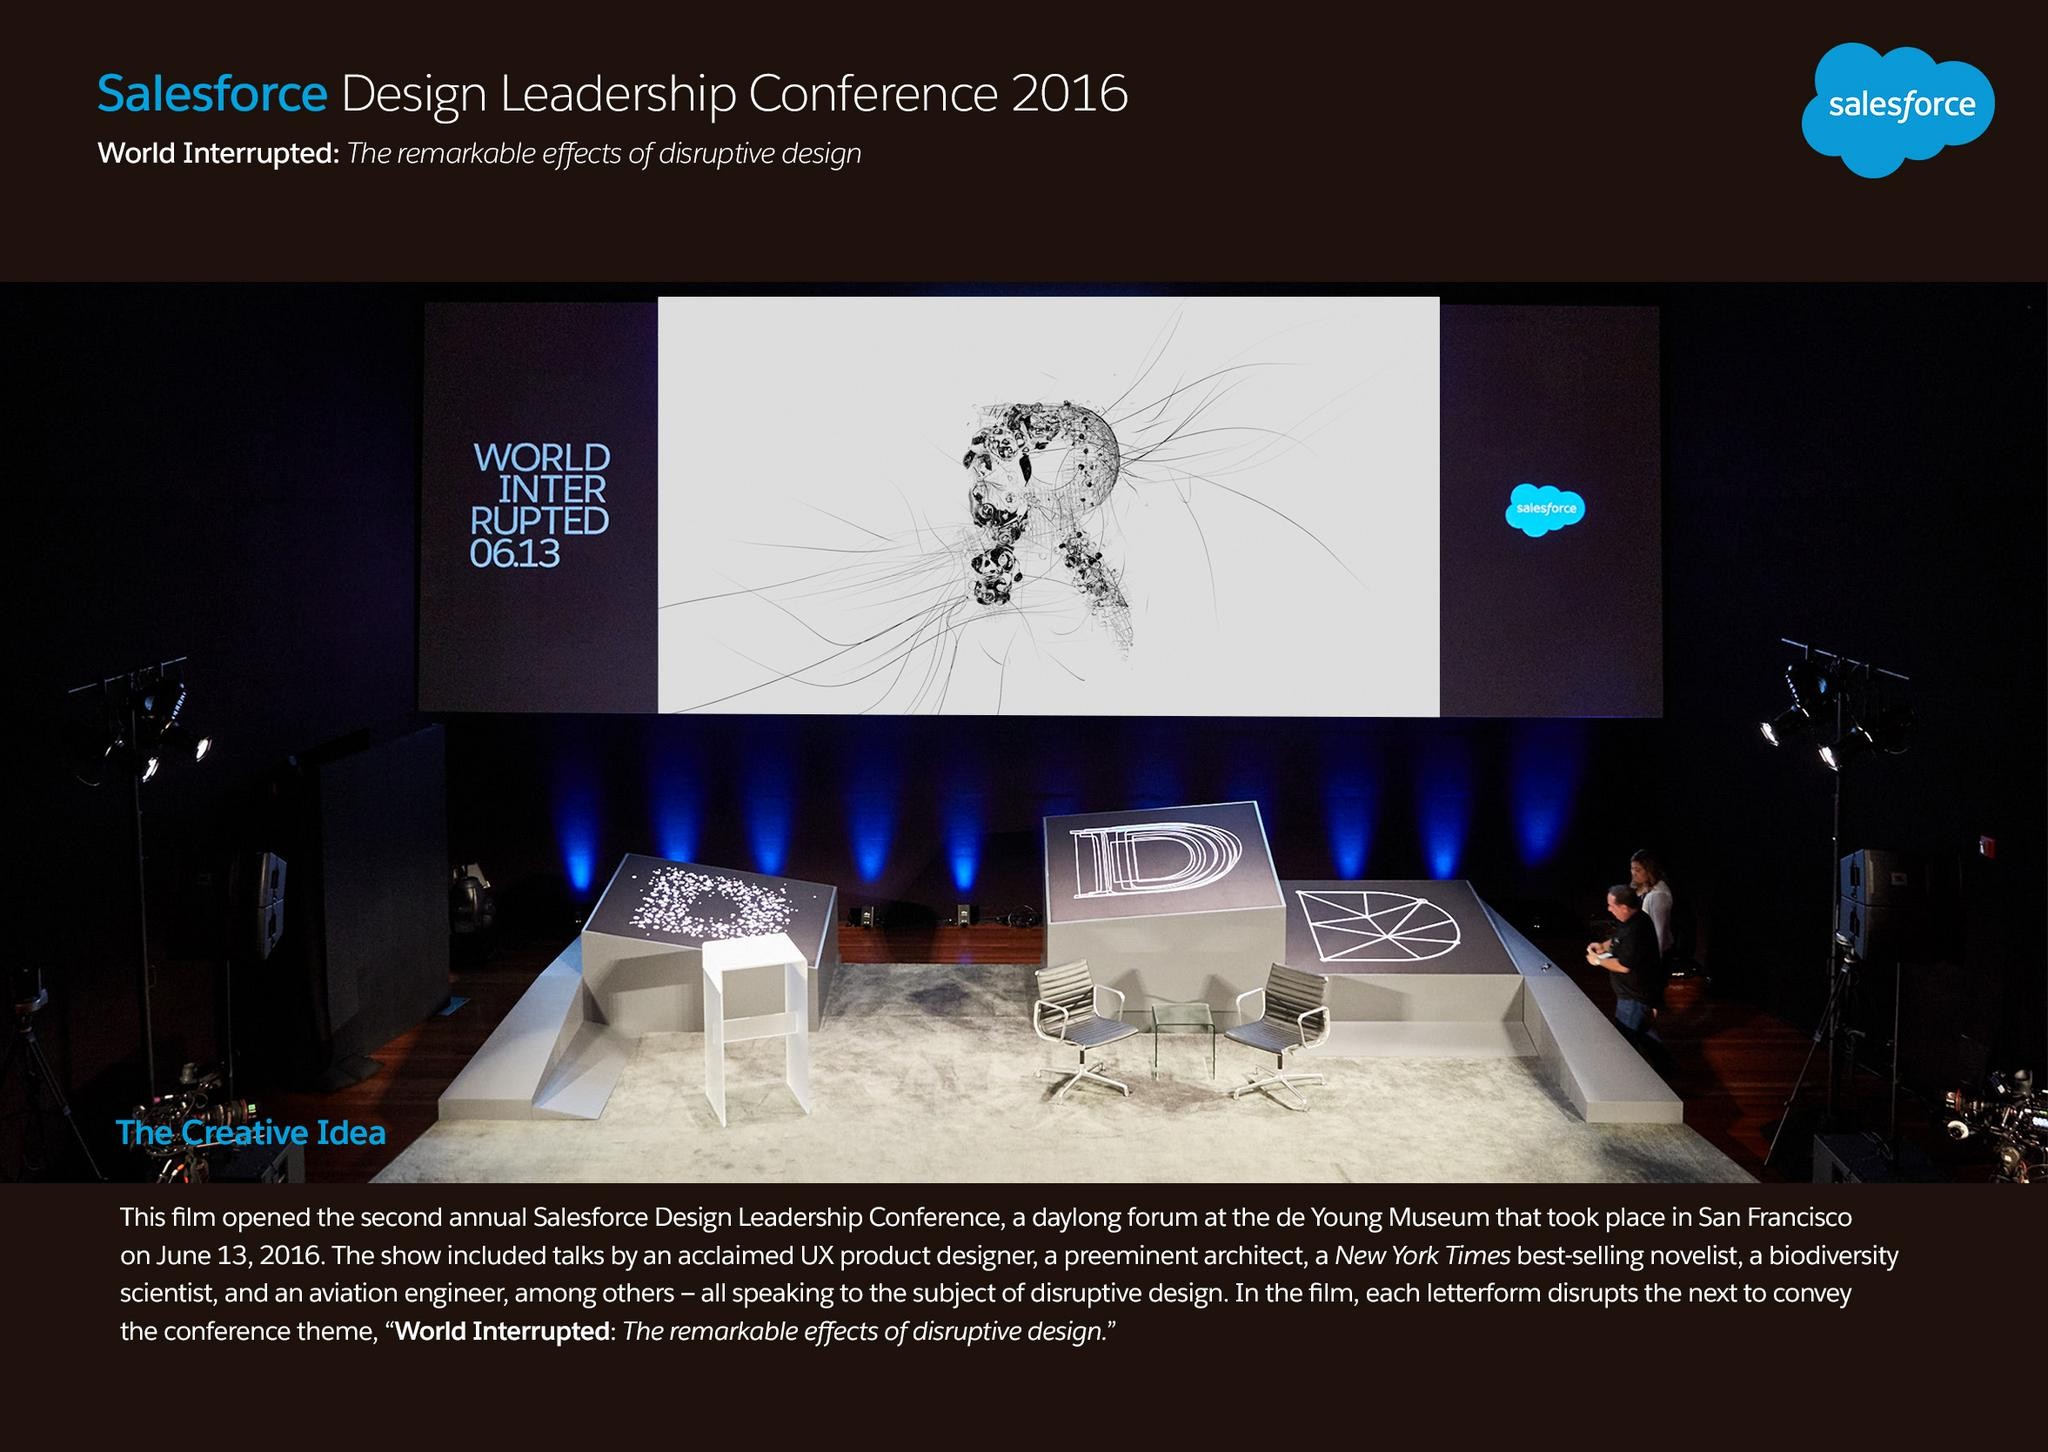 Salesforce Design Leadership Conference 2016, Introduction Video